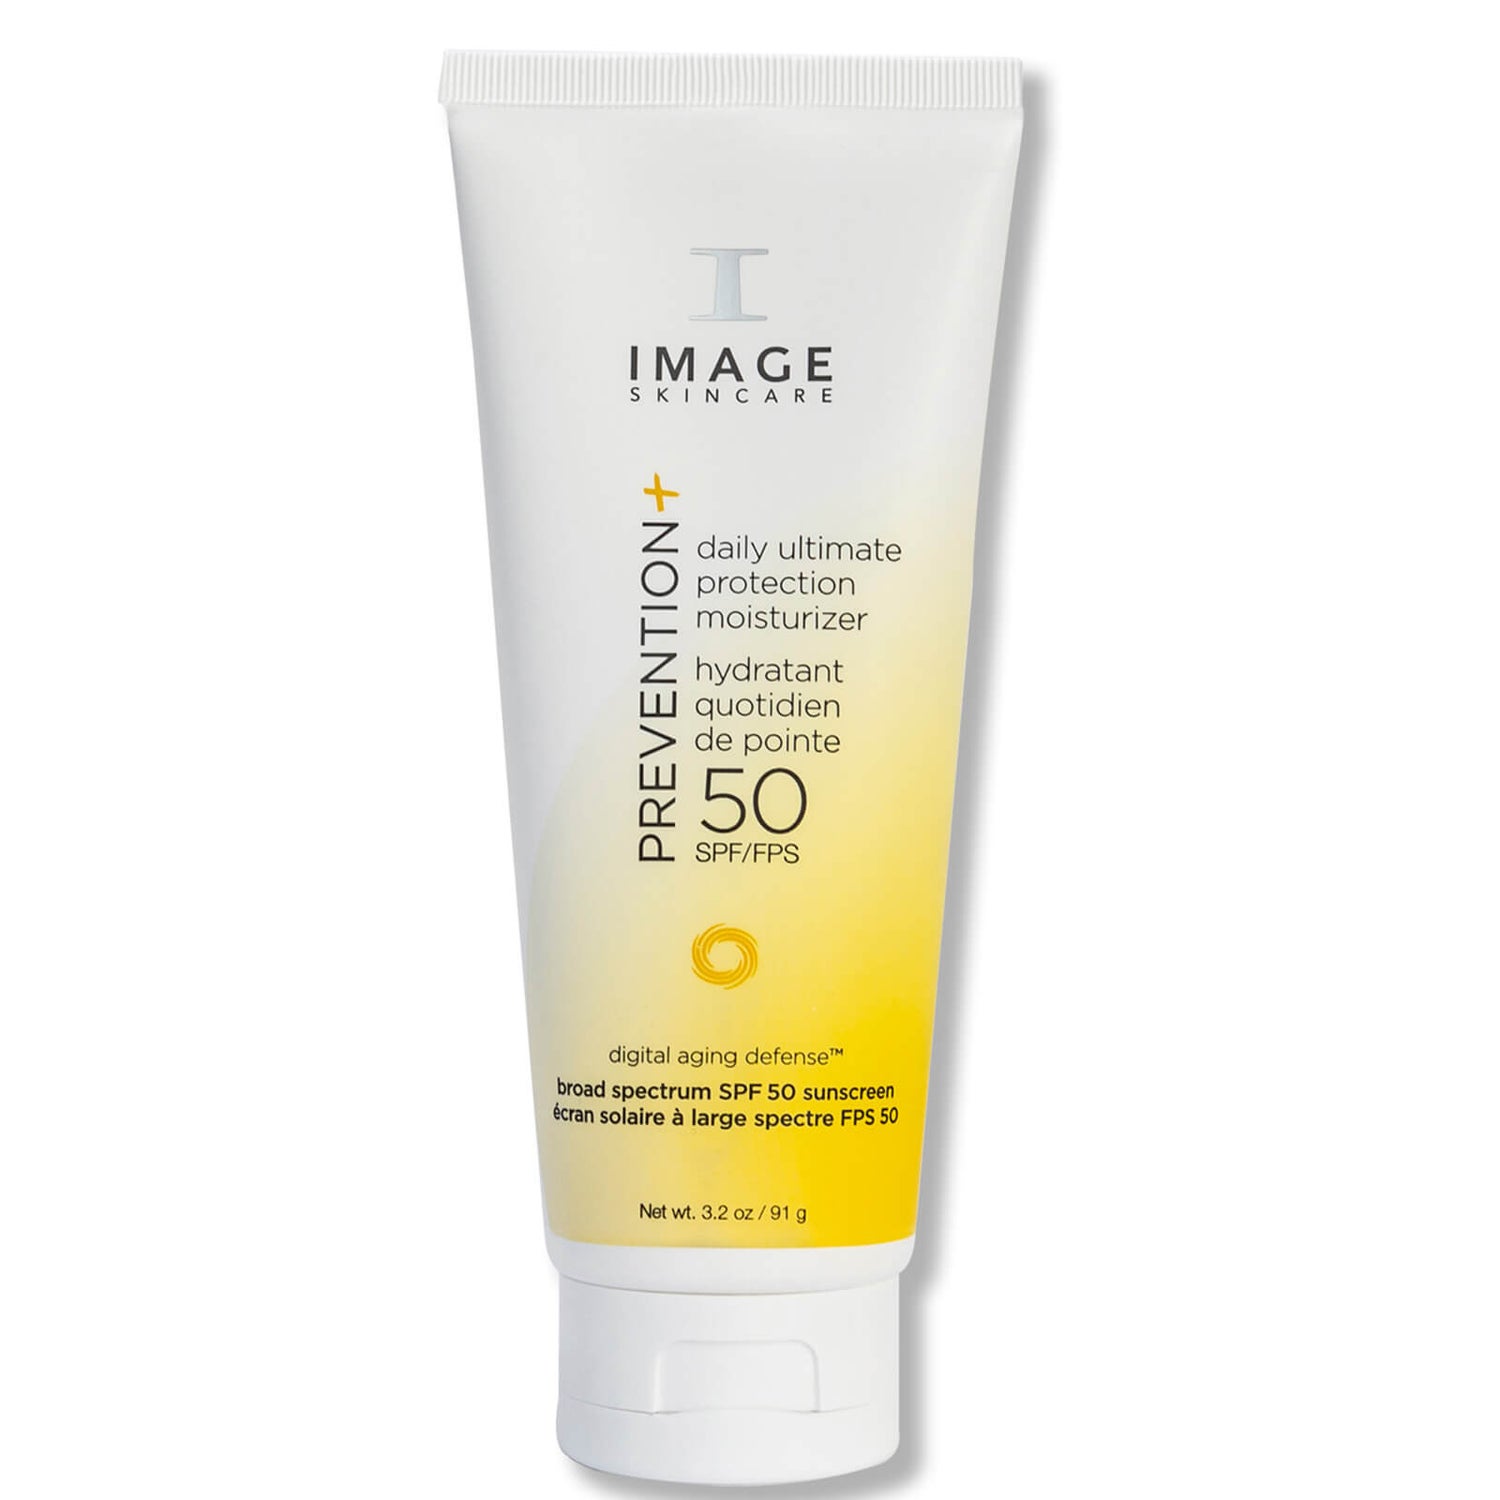 IMAGE Skincare PREVENTION Daily Ultimate Protection Moisturizer SPF 50 (3.2 fl. oz.)